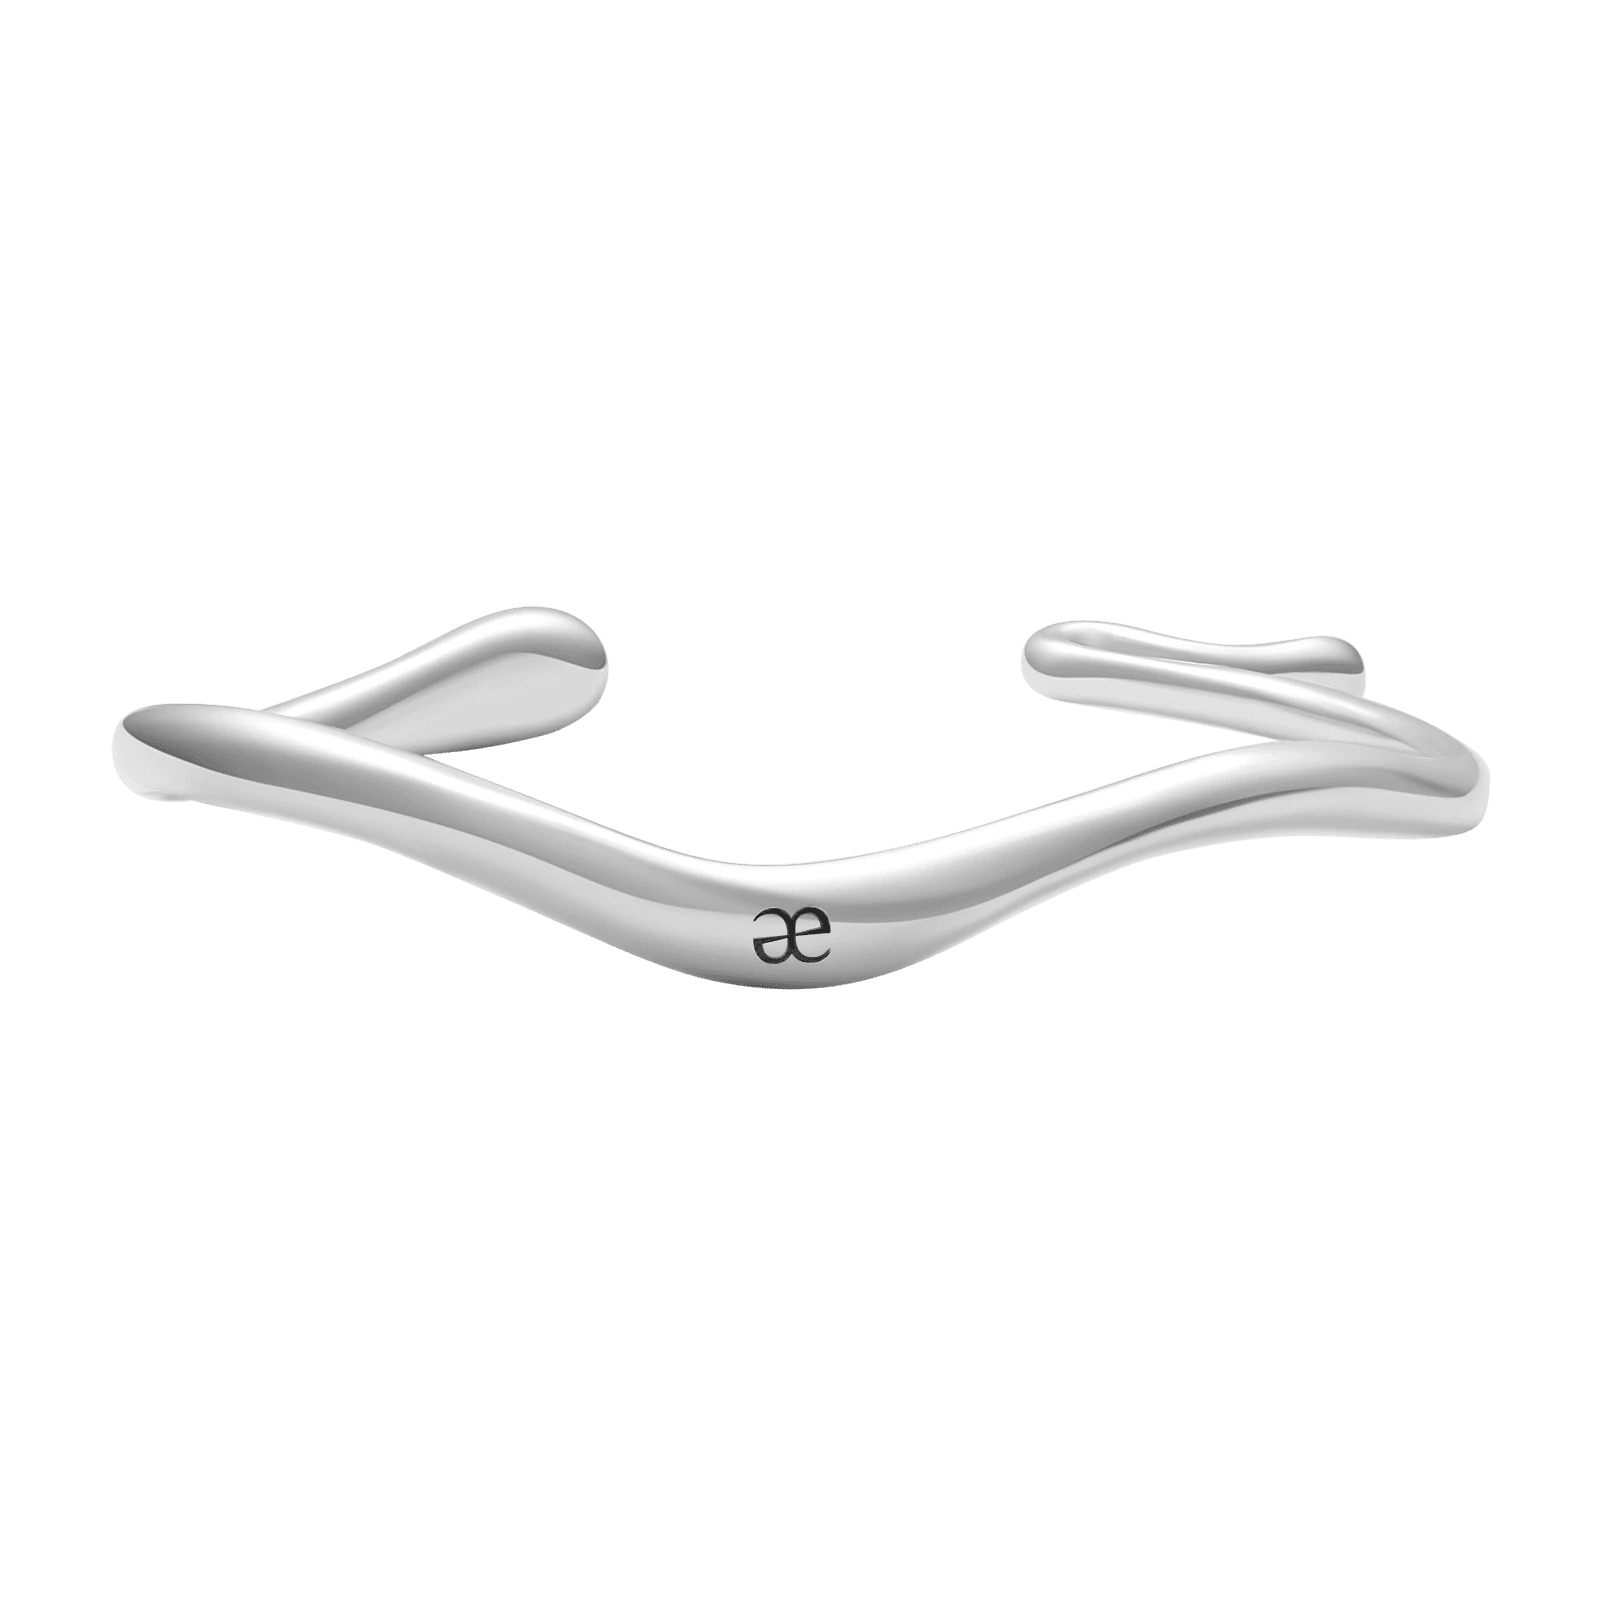 Gravity Bracelet Cuff - GraedanceGRB01SLVS